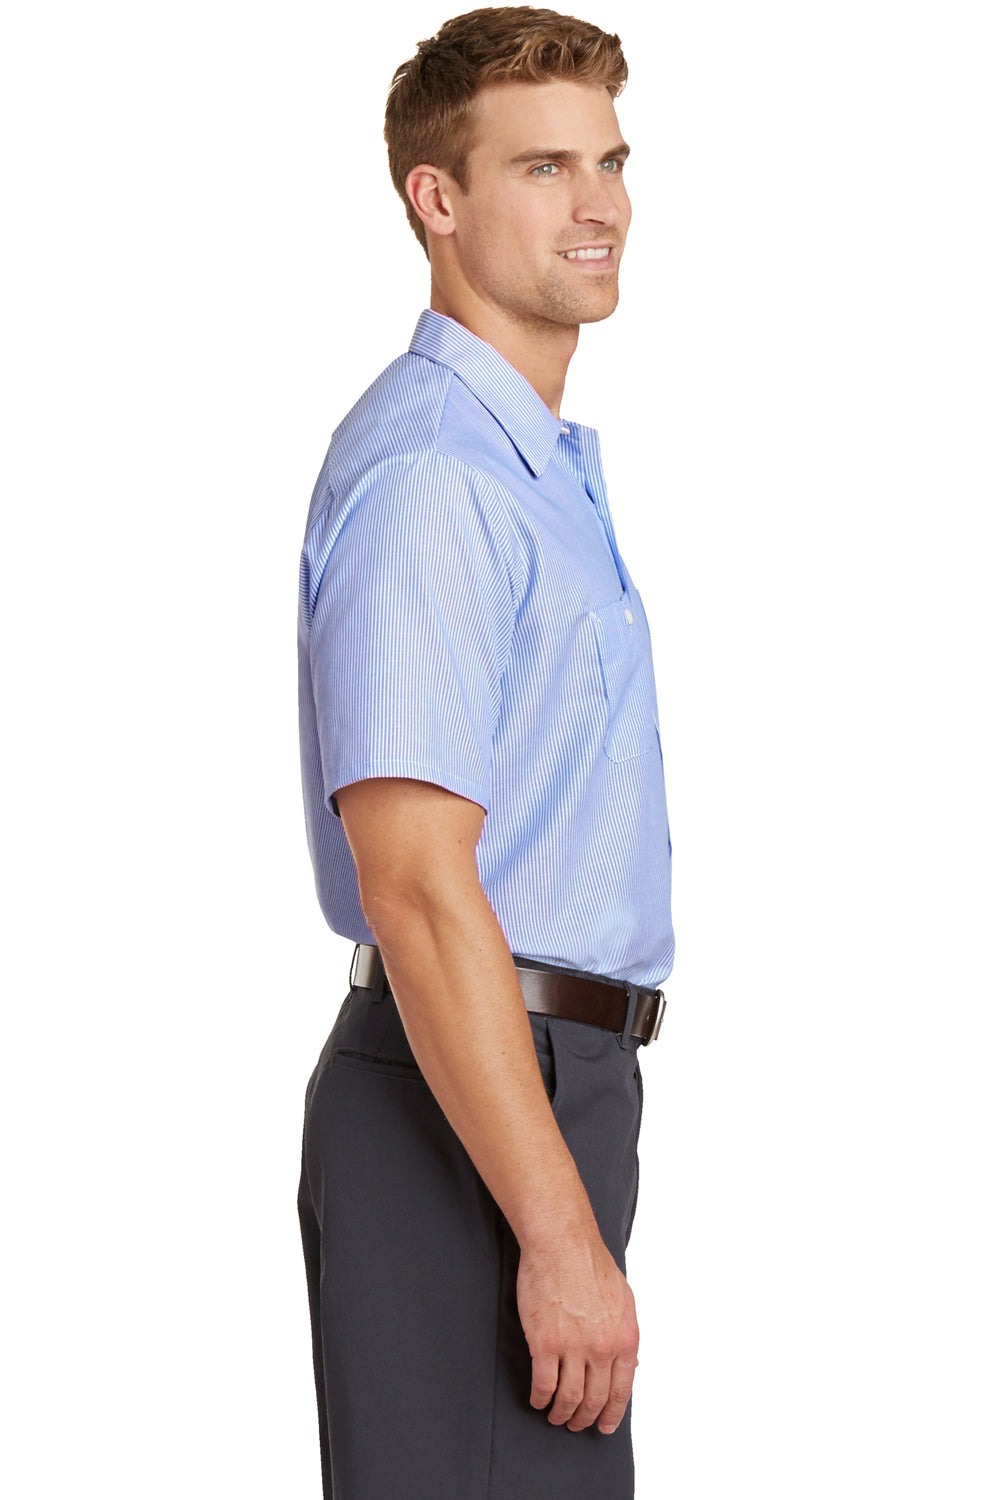 Red Kap CS20/CS20LONG Mens Industrial Moisture Wicking Short Sleeve Button Down Shirt w/ Double Pockets White/Blue Side